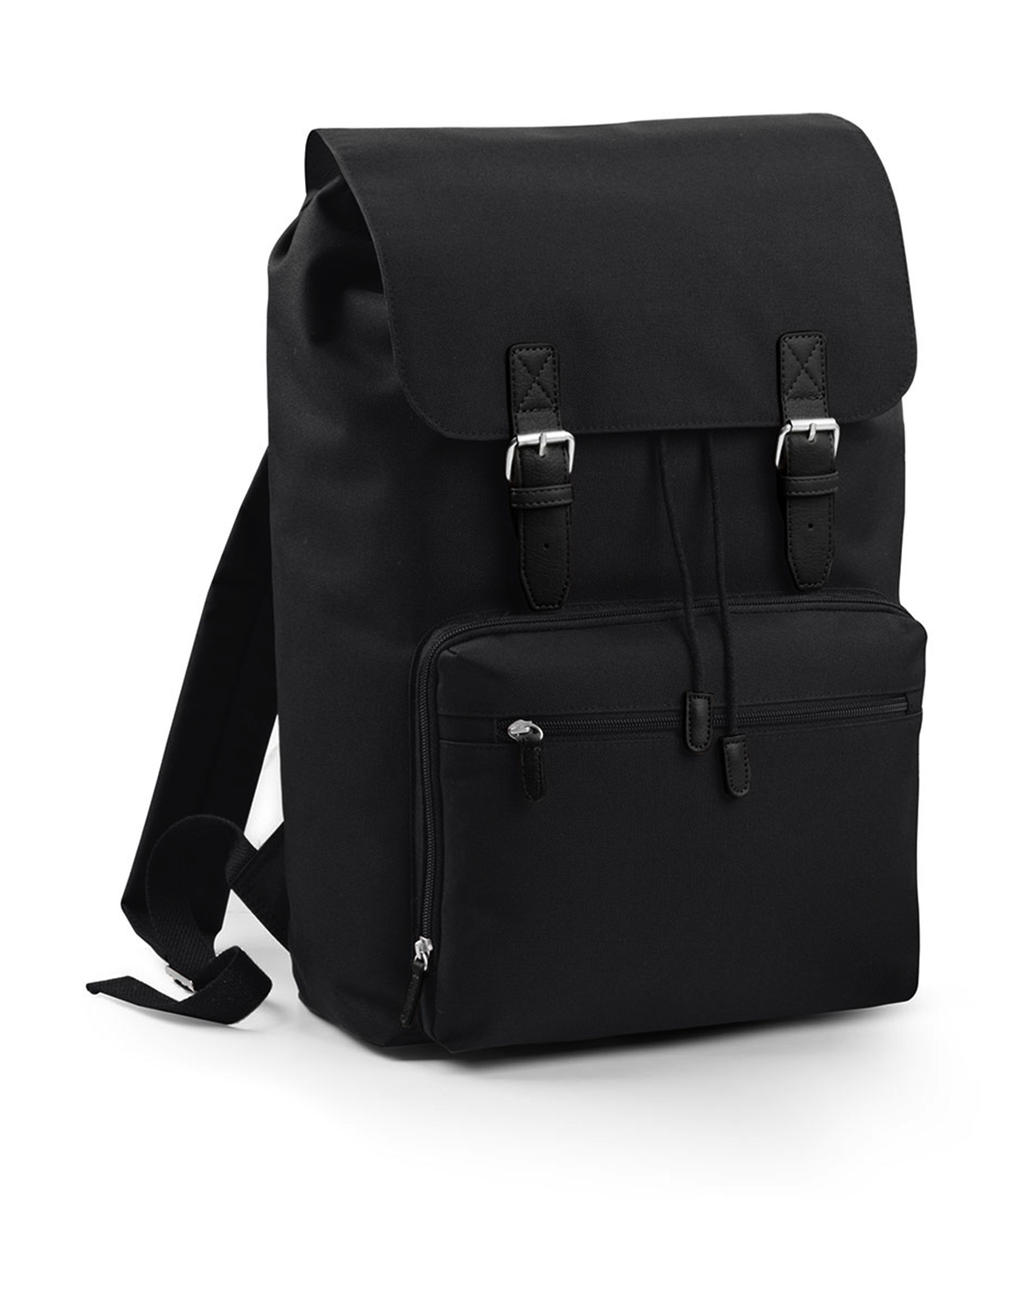  Vintage Laptop Backpack in Farbe Black/Black